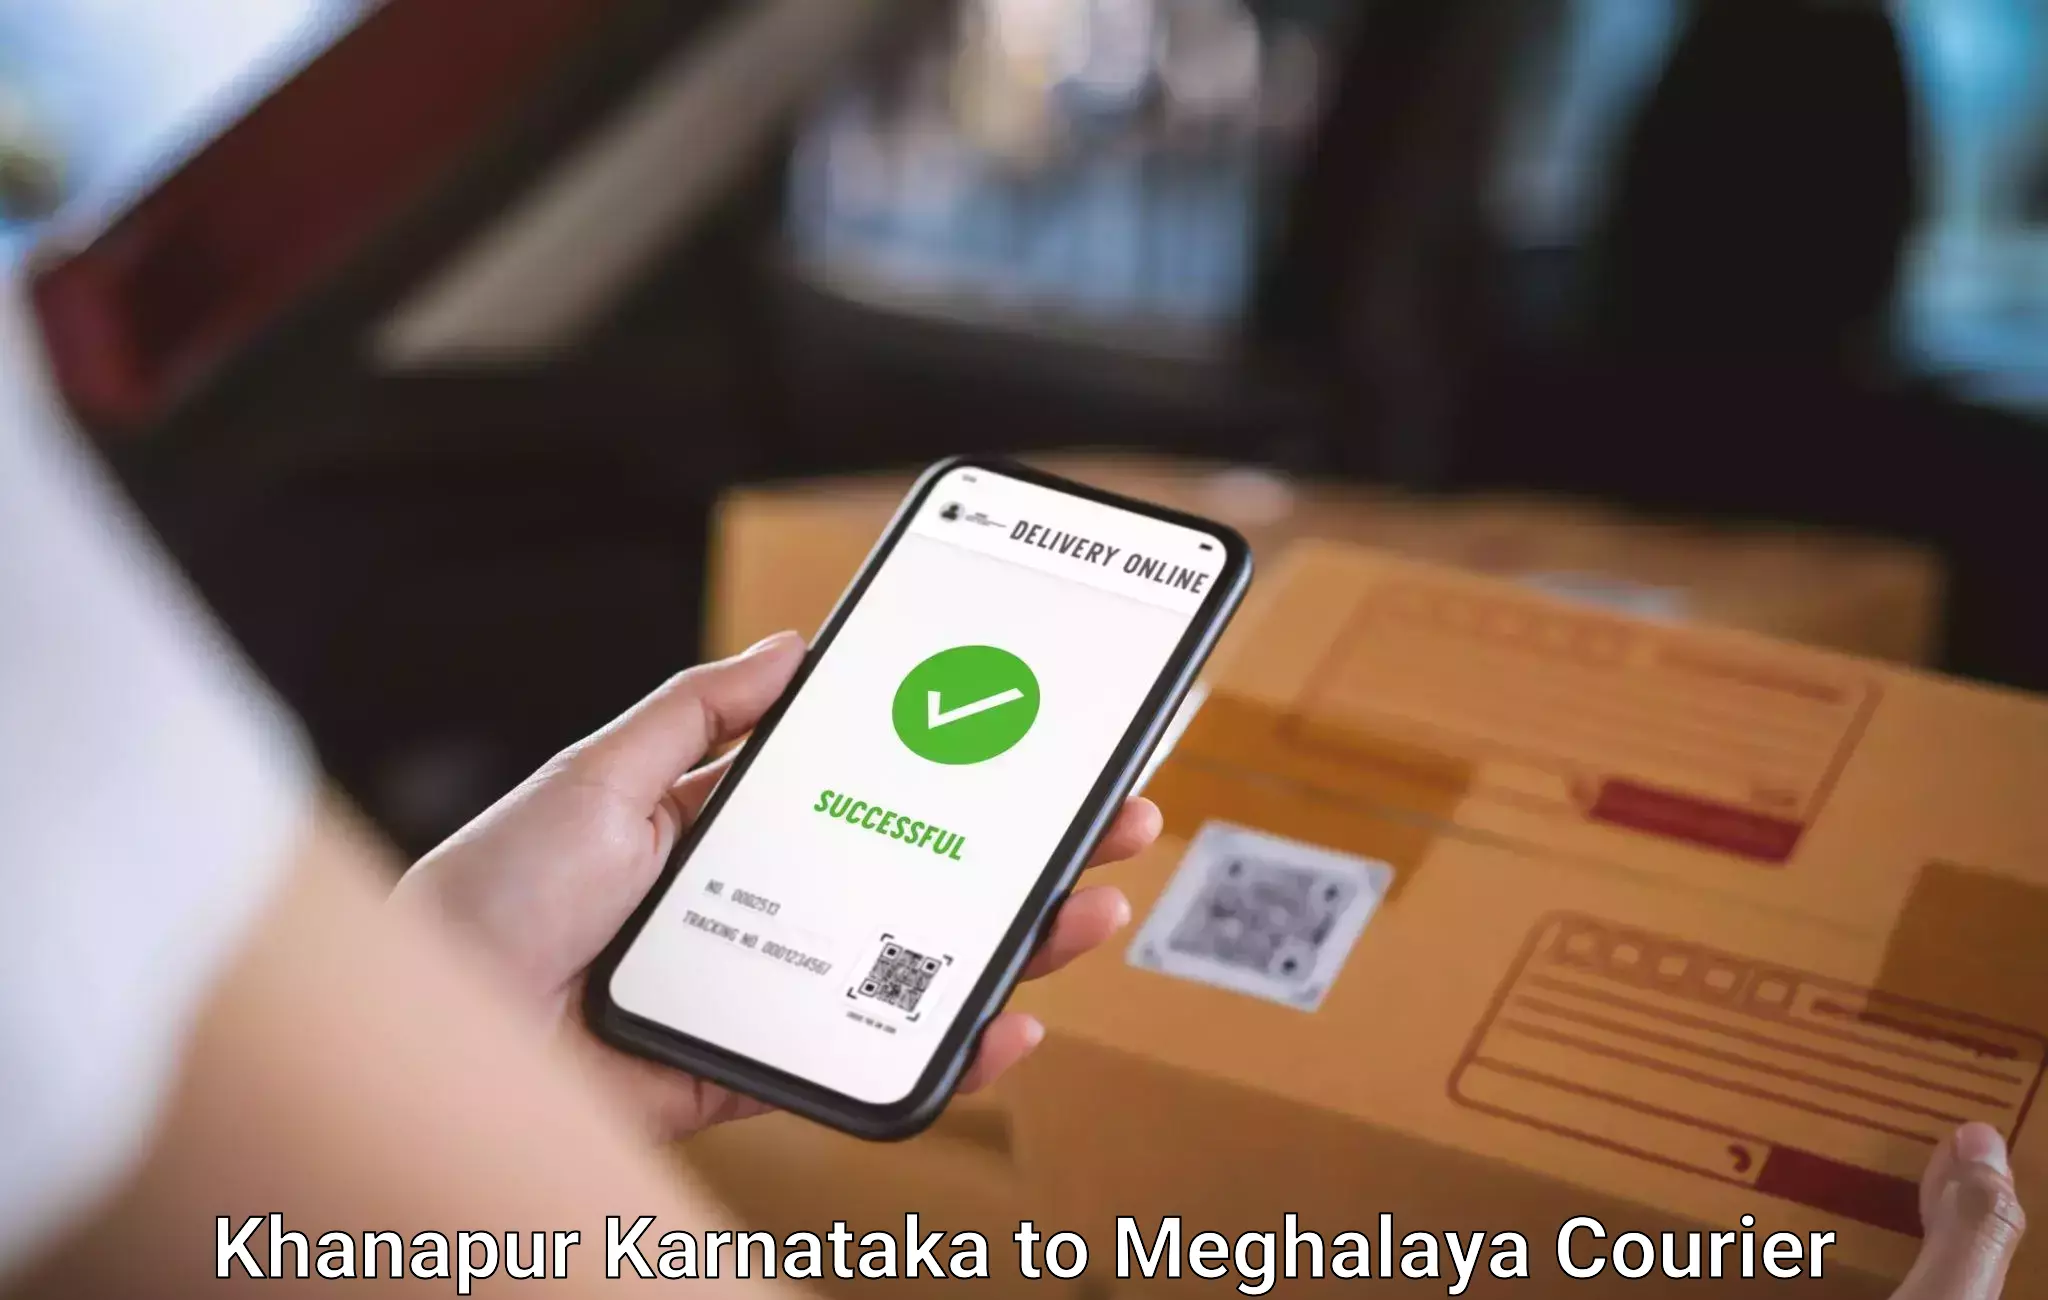 Luggage delivery network Khanapur Karnataka to Cherrapunji